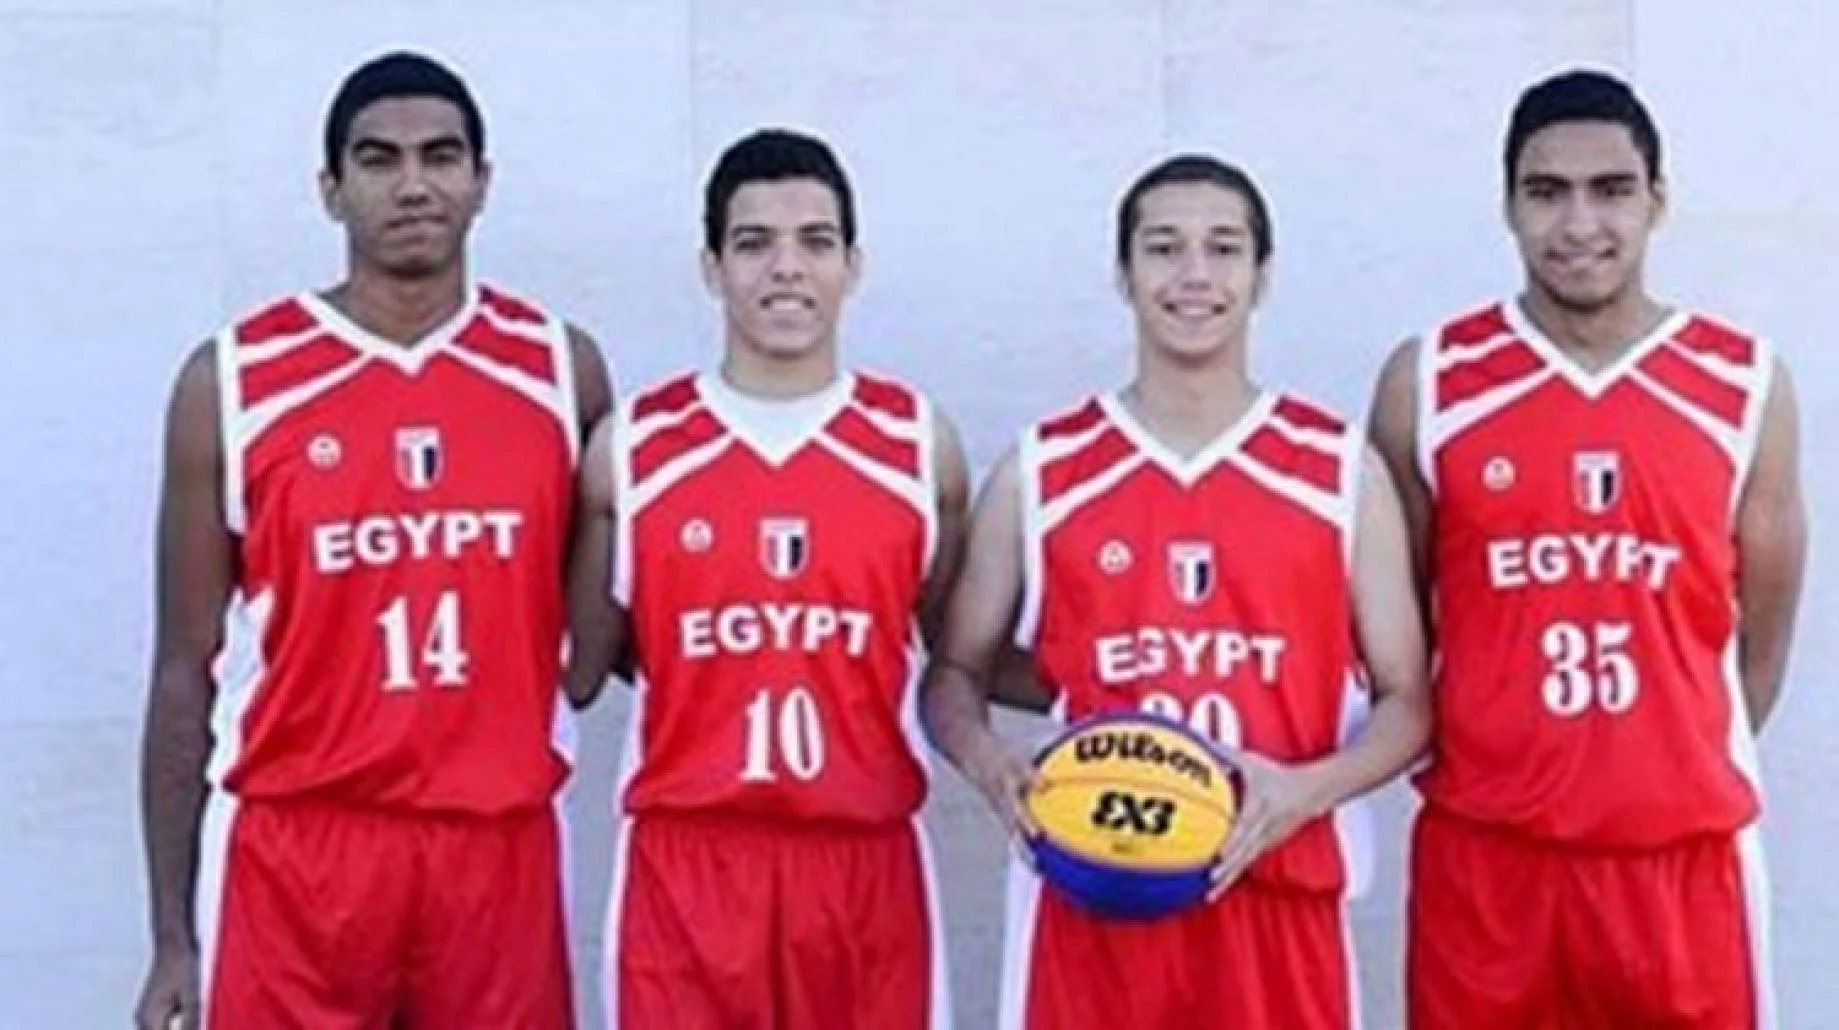 5270ae927ae8a901ef7cb43a2006f5c1   مصر.. تصعد للدور قبل النهائي لأمم إفريقيا لكرة السلة ذكور (أقل من 18 سنة)